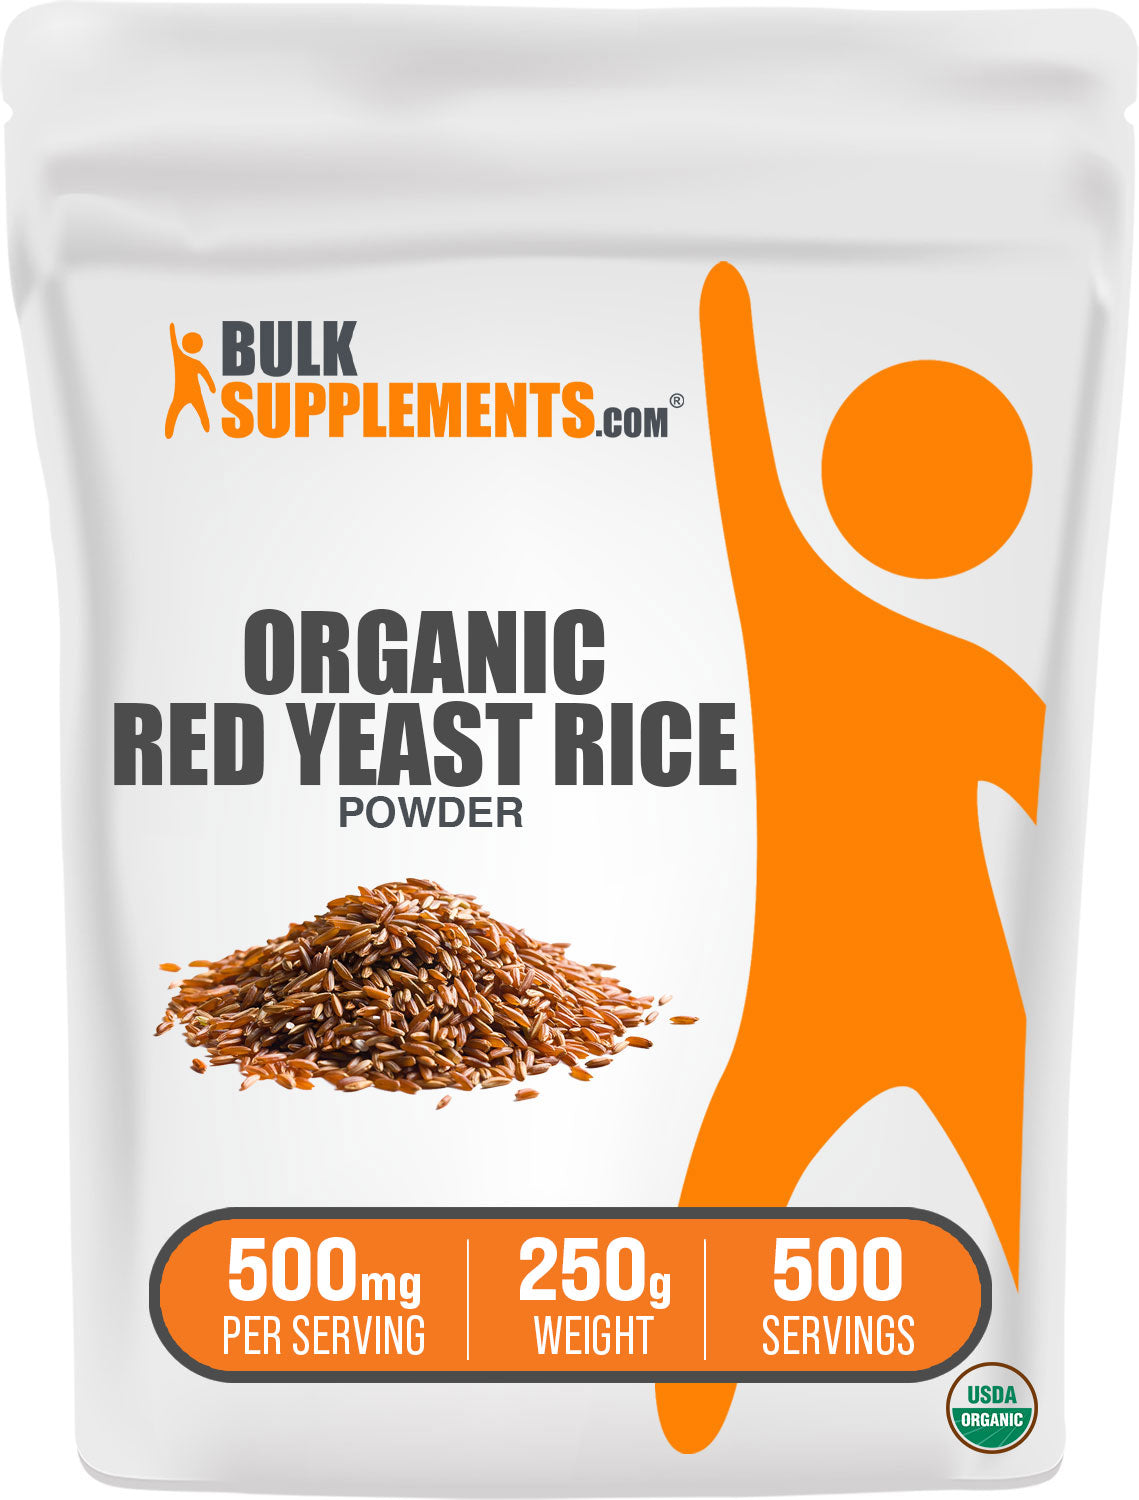 BulkSupplements.com Organic Red Yeast Rice Powder 250g Bag